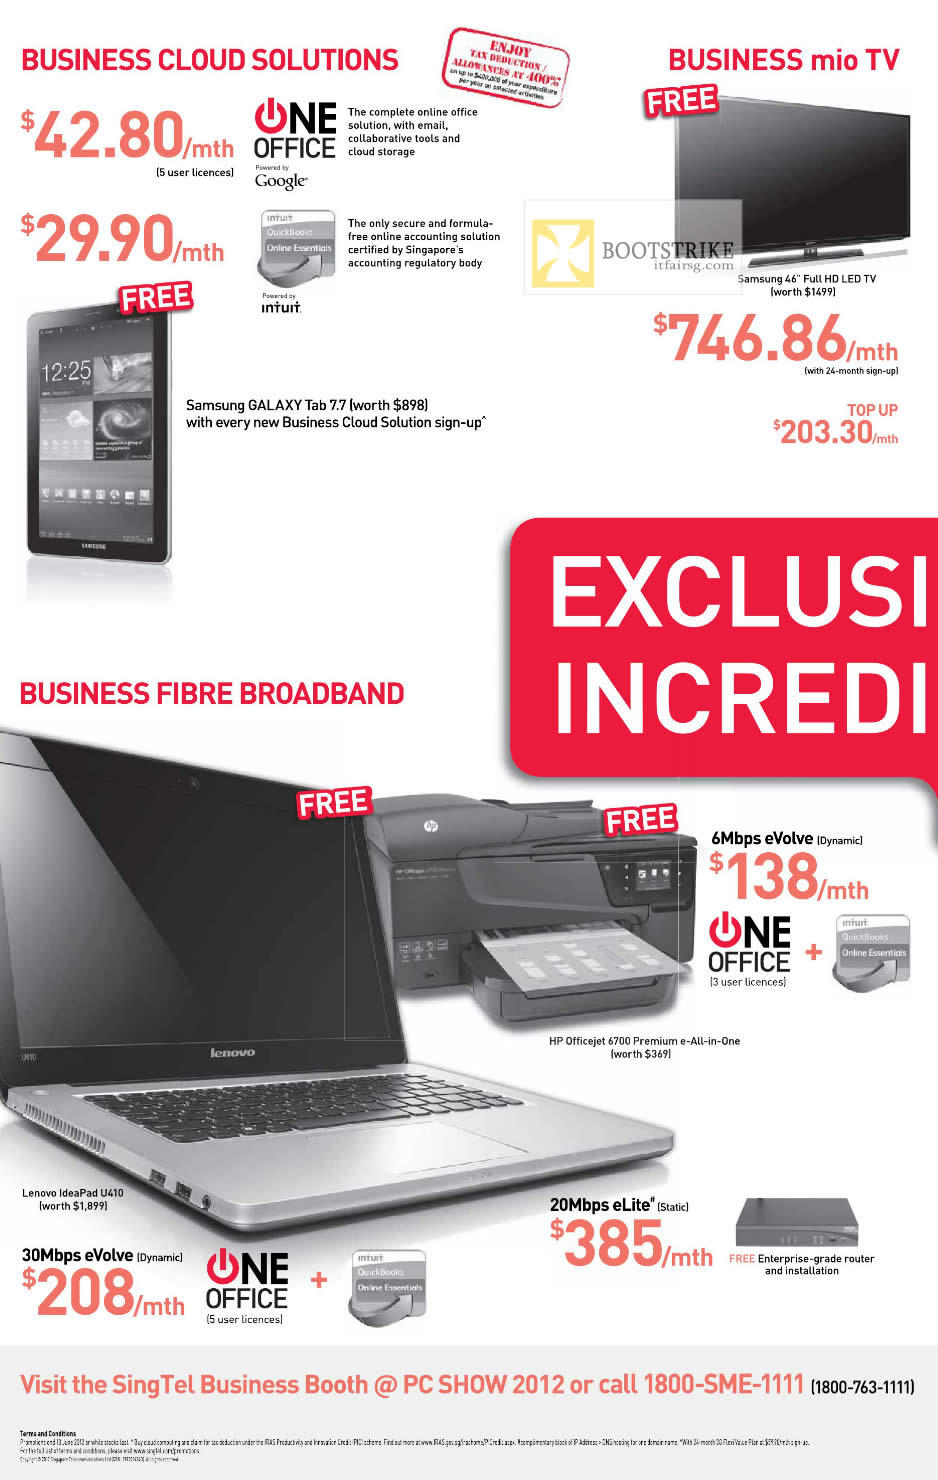 PC SHOW 2012 price list image brochure of Singtel Business Cloud One Office, Fibre Broadband, EVolve, ELite